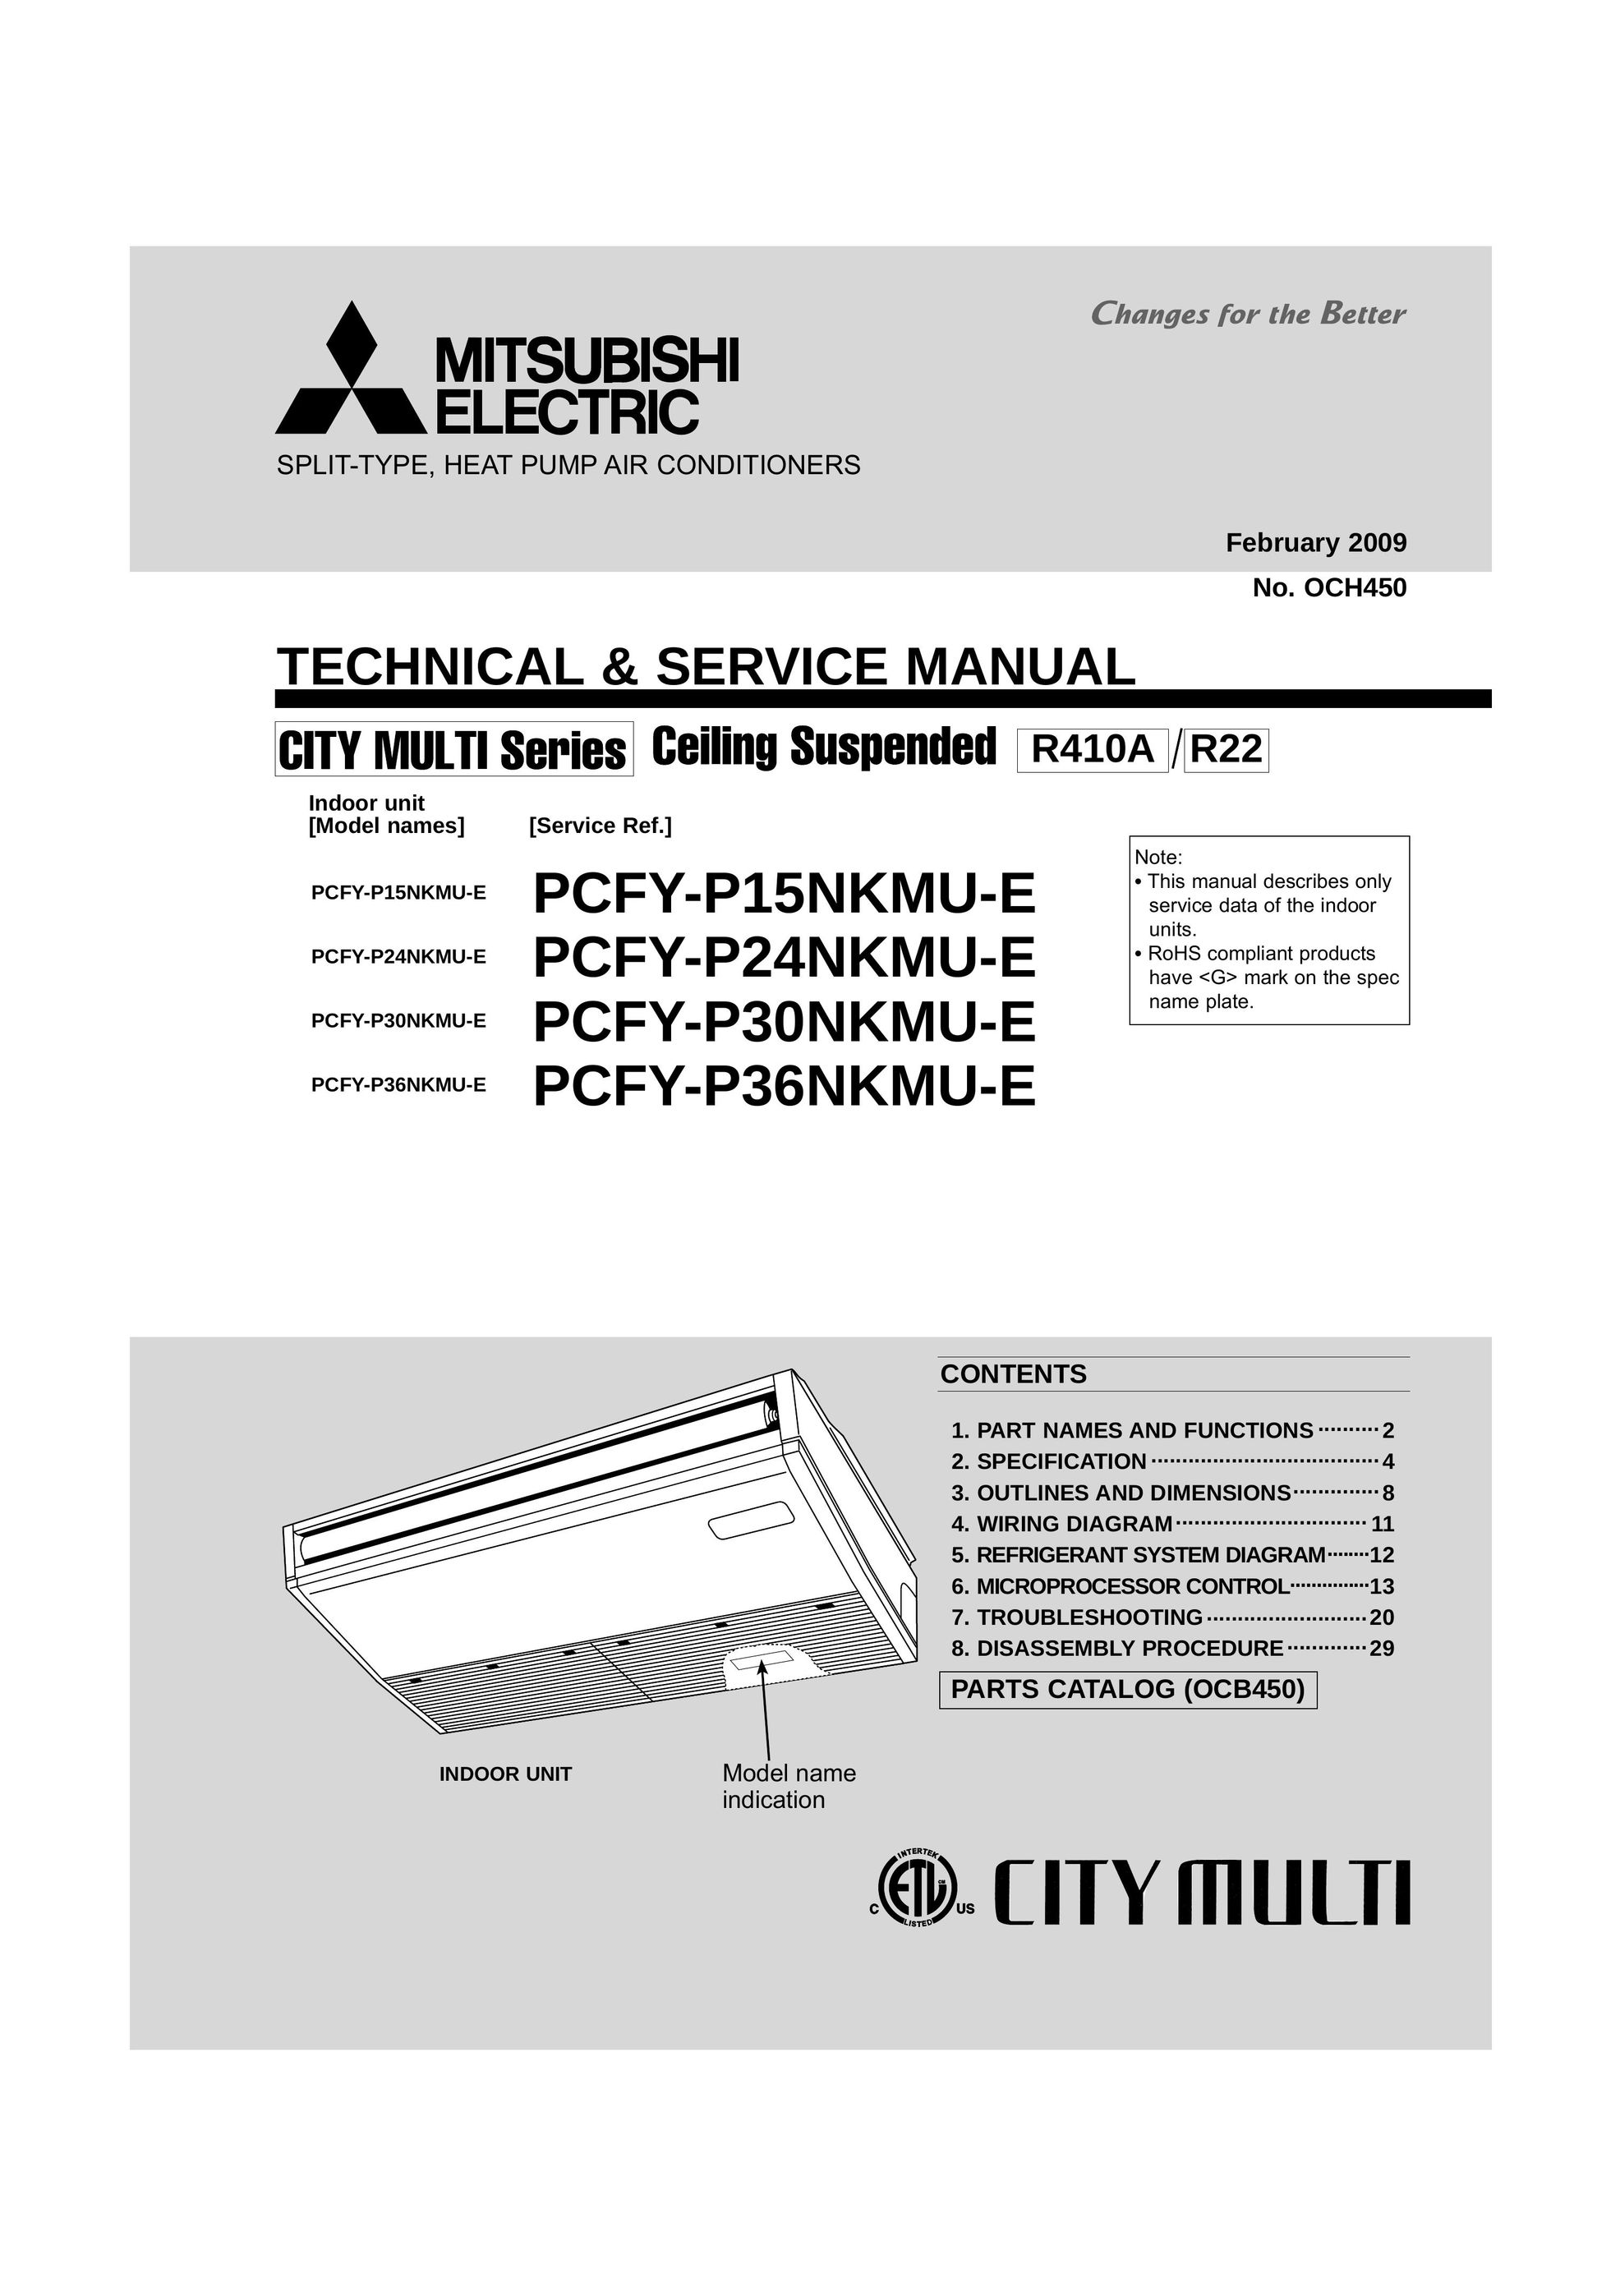 Mitsubishi Electronics PCFY-P15NKMU-E Heat Pump User Manual